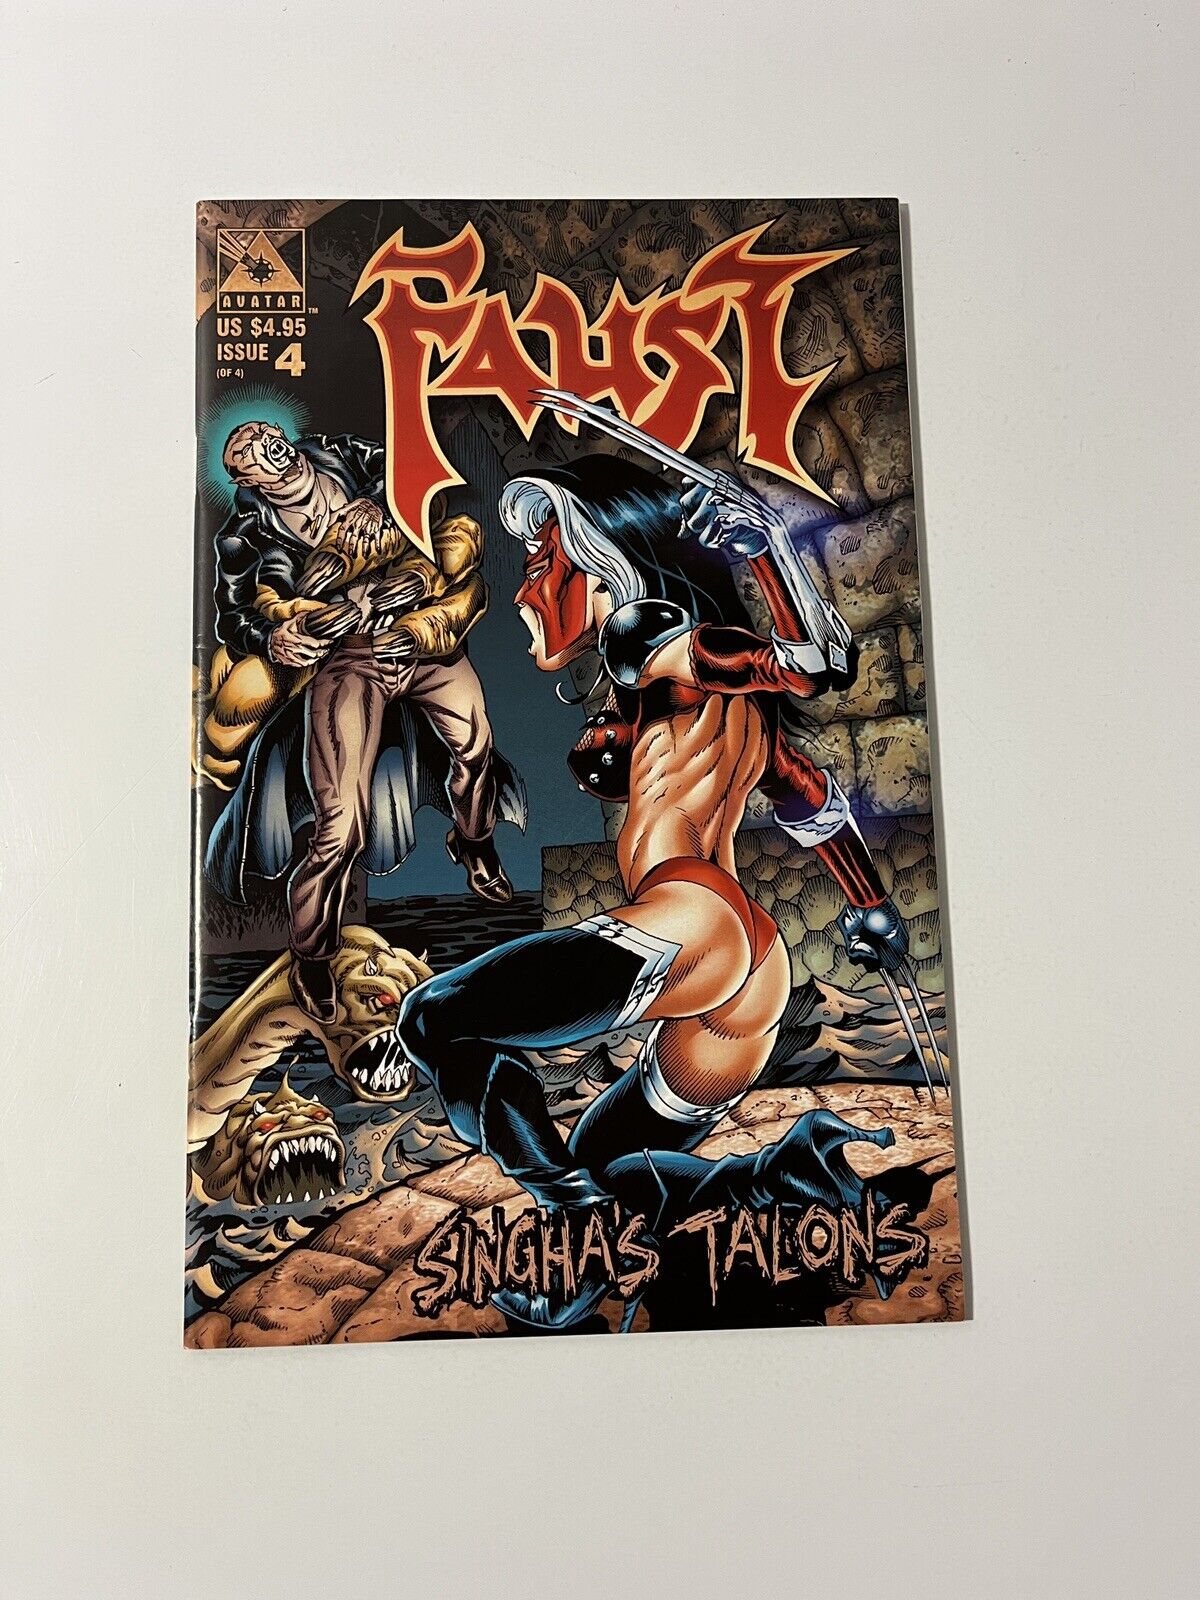 Faust-Singha's Talons #4 Avatar Comics Tim Vigil Indie Book Cover B